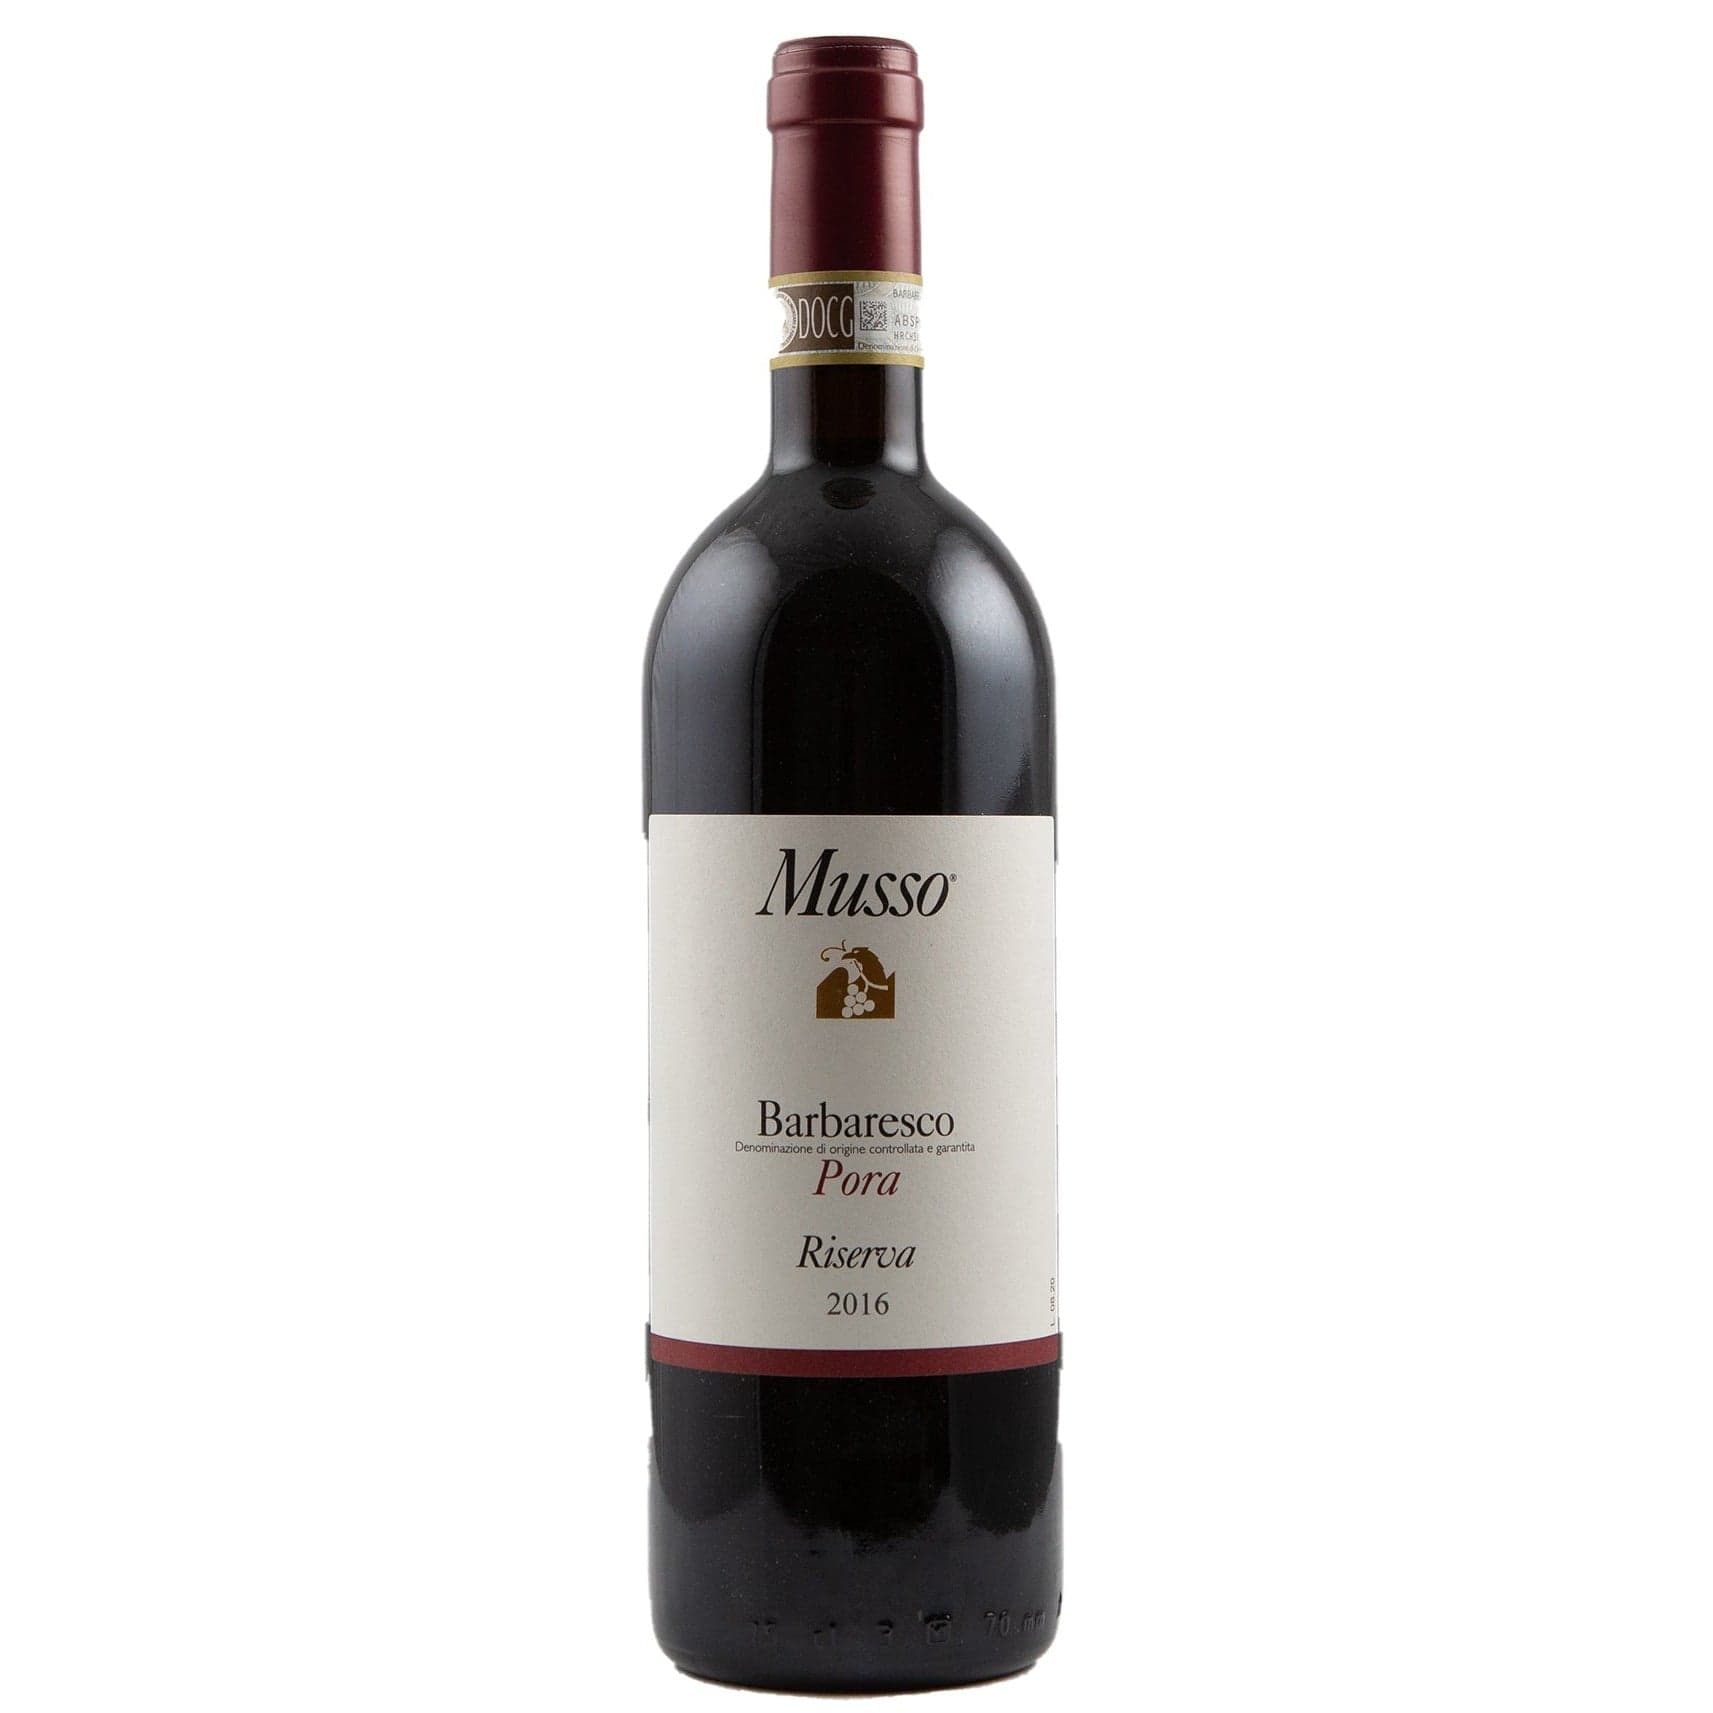 Single bottle of Red wine Musso, Pora Riserva, Barbaresco, DOCG, 2016 100% Nebbiolo